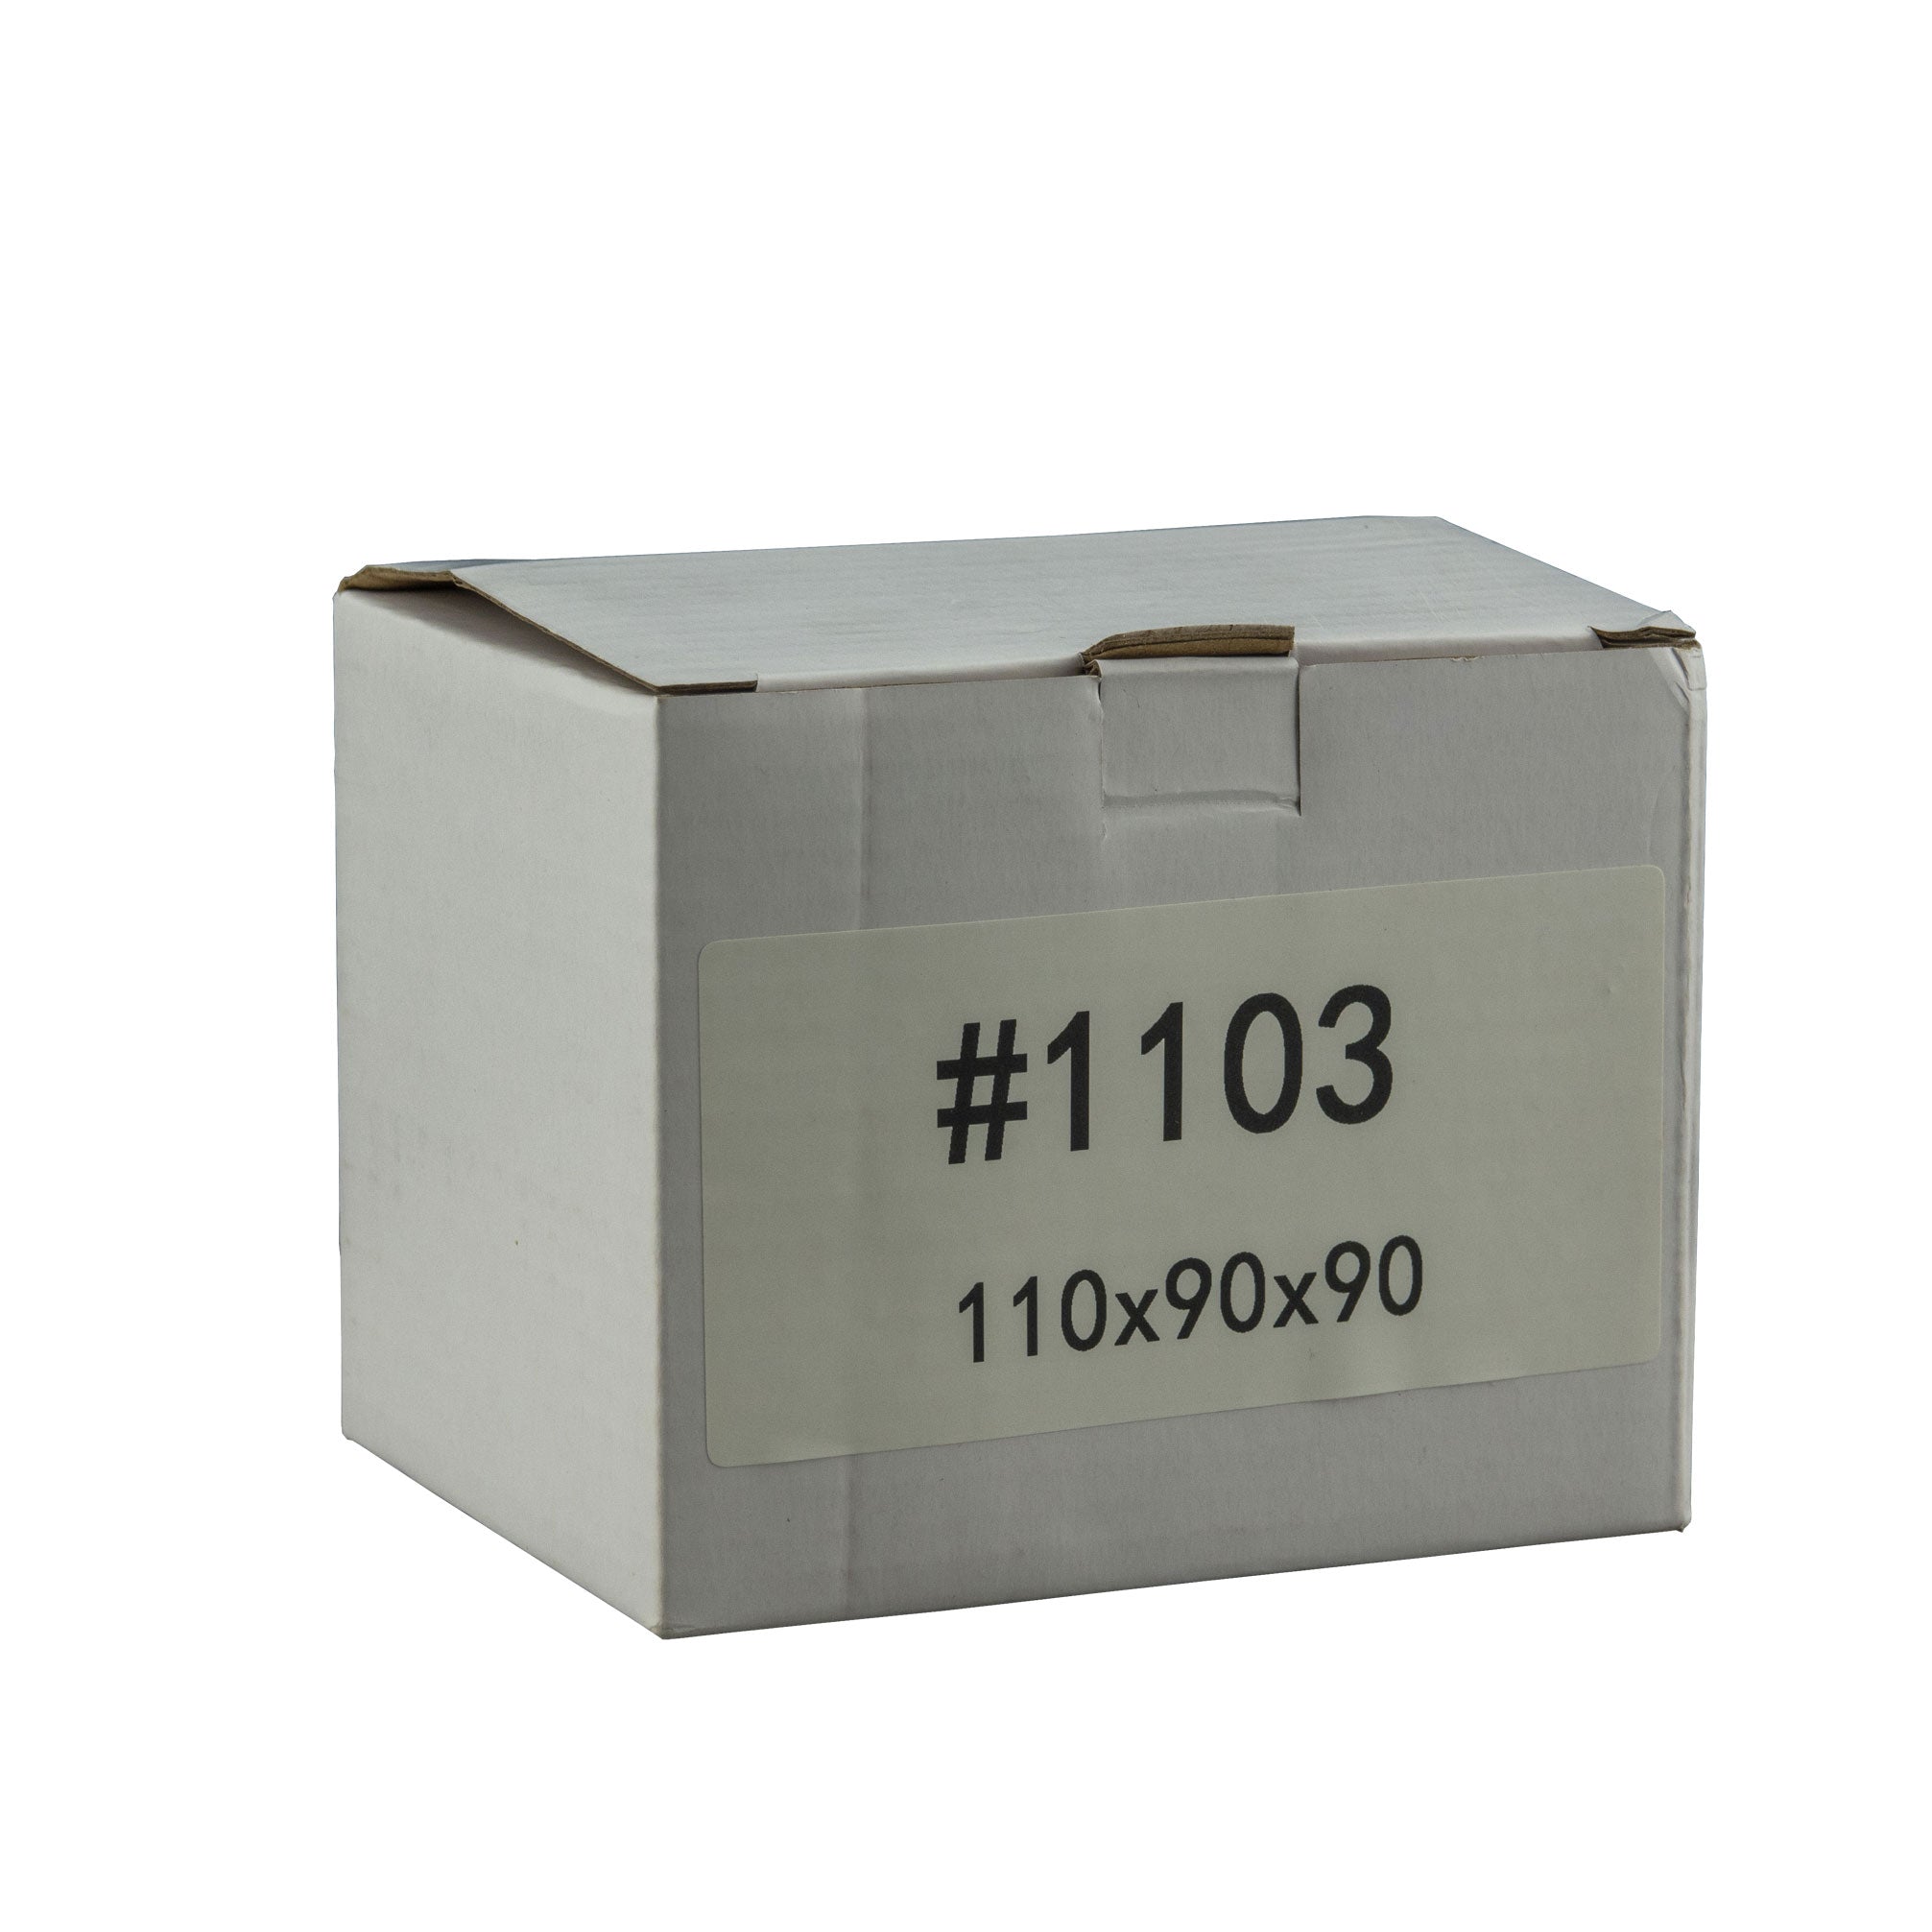 110mm x 90mm x 90mm White Carton Cardboard Shipping Box (#1103)